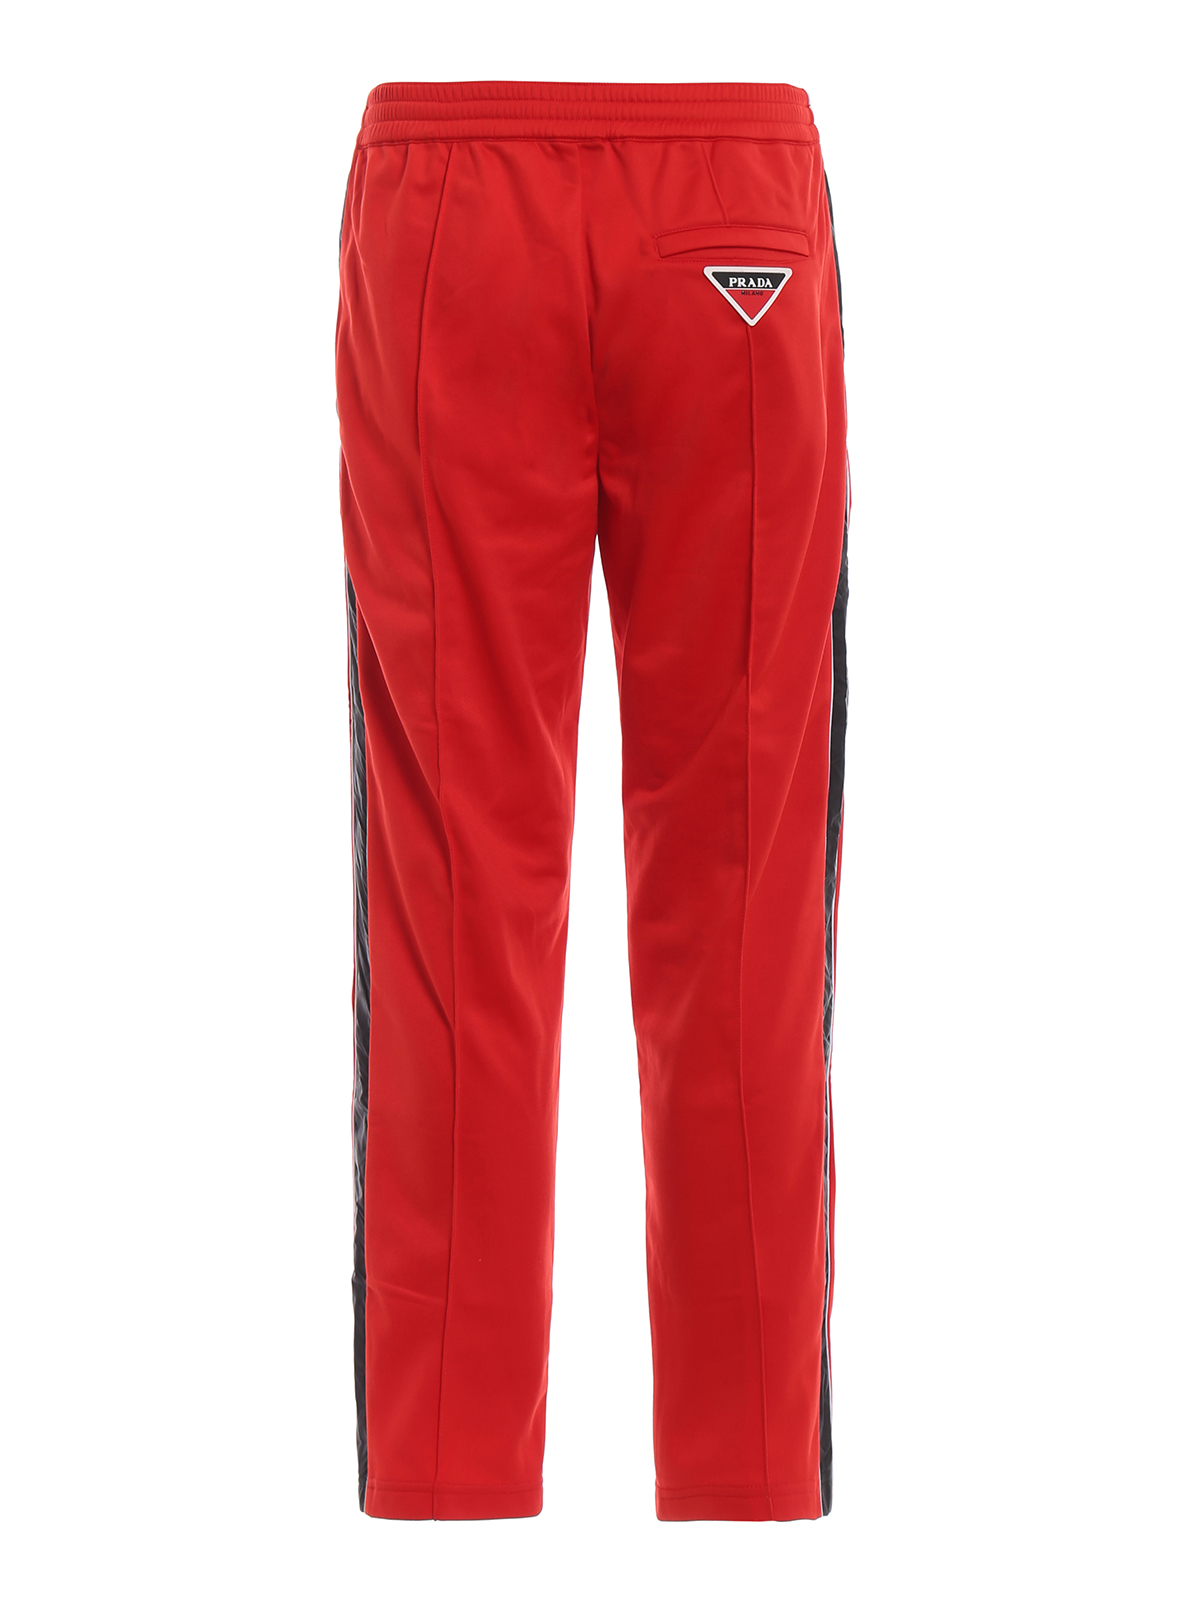 Tracksuit bottoms Prada - Red fleece track pants - SJP2491QM9011